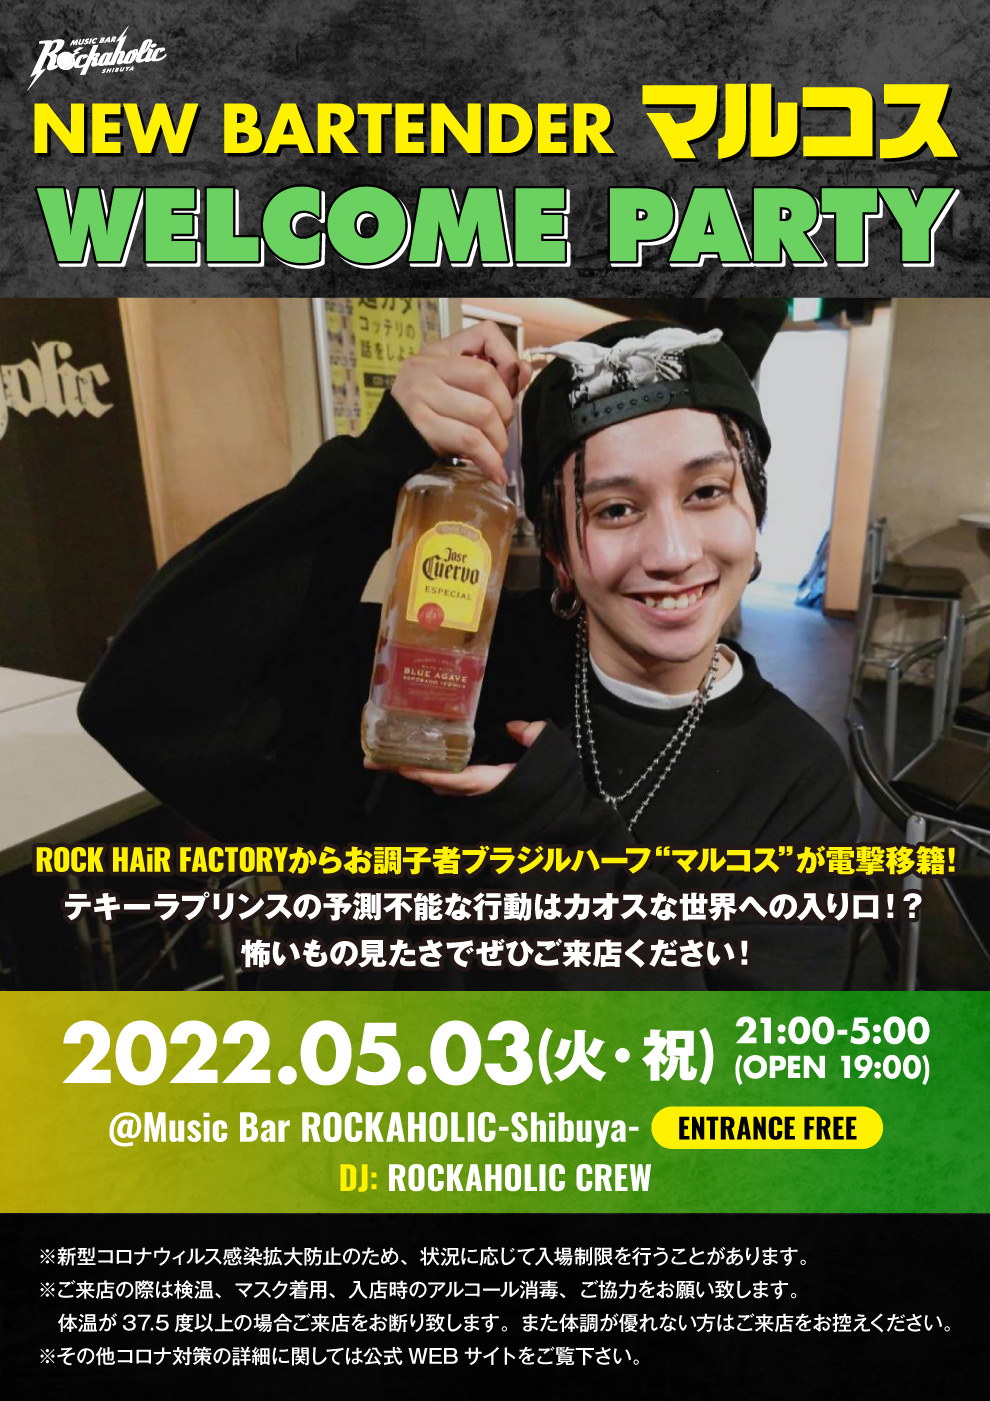 https://bar-rockaholic.jp/shibuya/blog/8C1F5FE3-48CD-4967-9CCC-31036EBBF837.jpeg